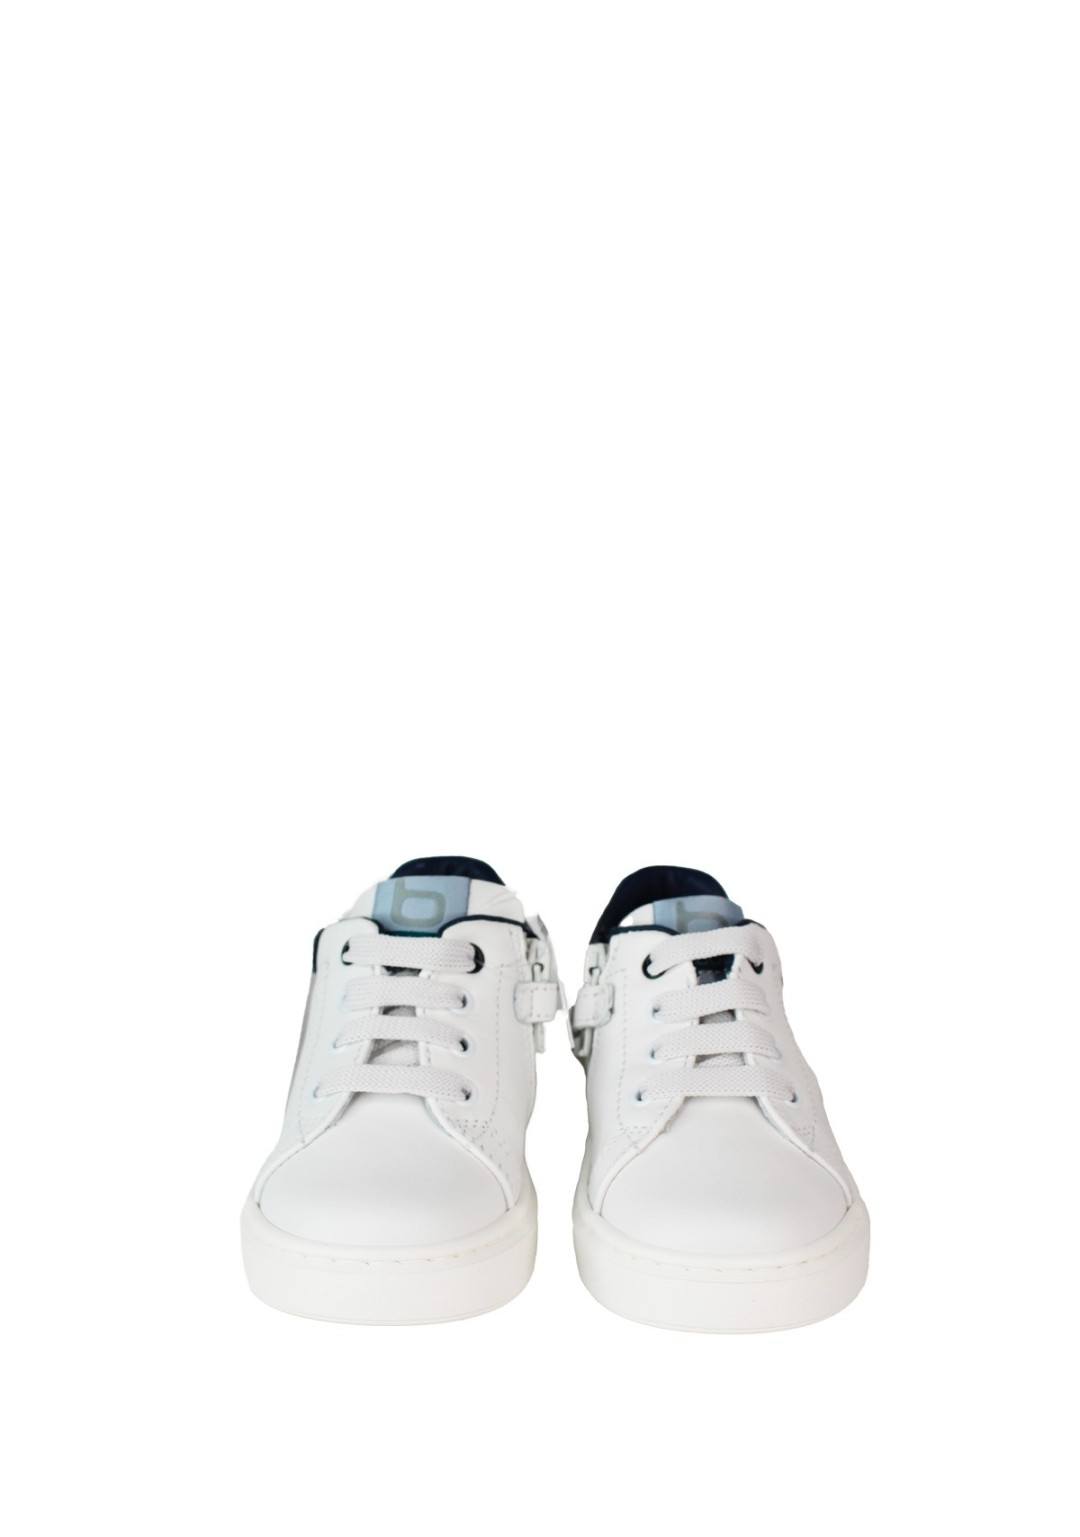 Balducci - Sneaker Logo B - Bambine e ragazze - MSP4158L